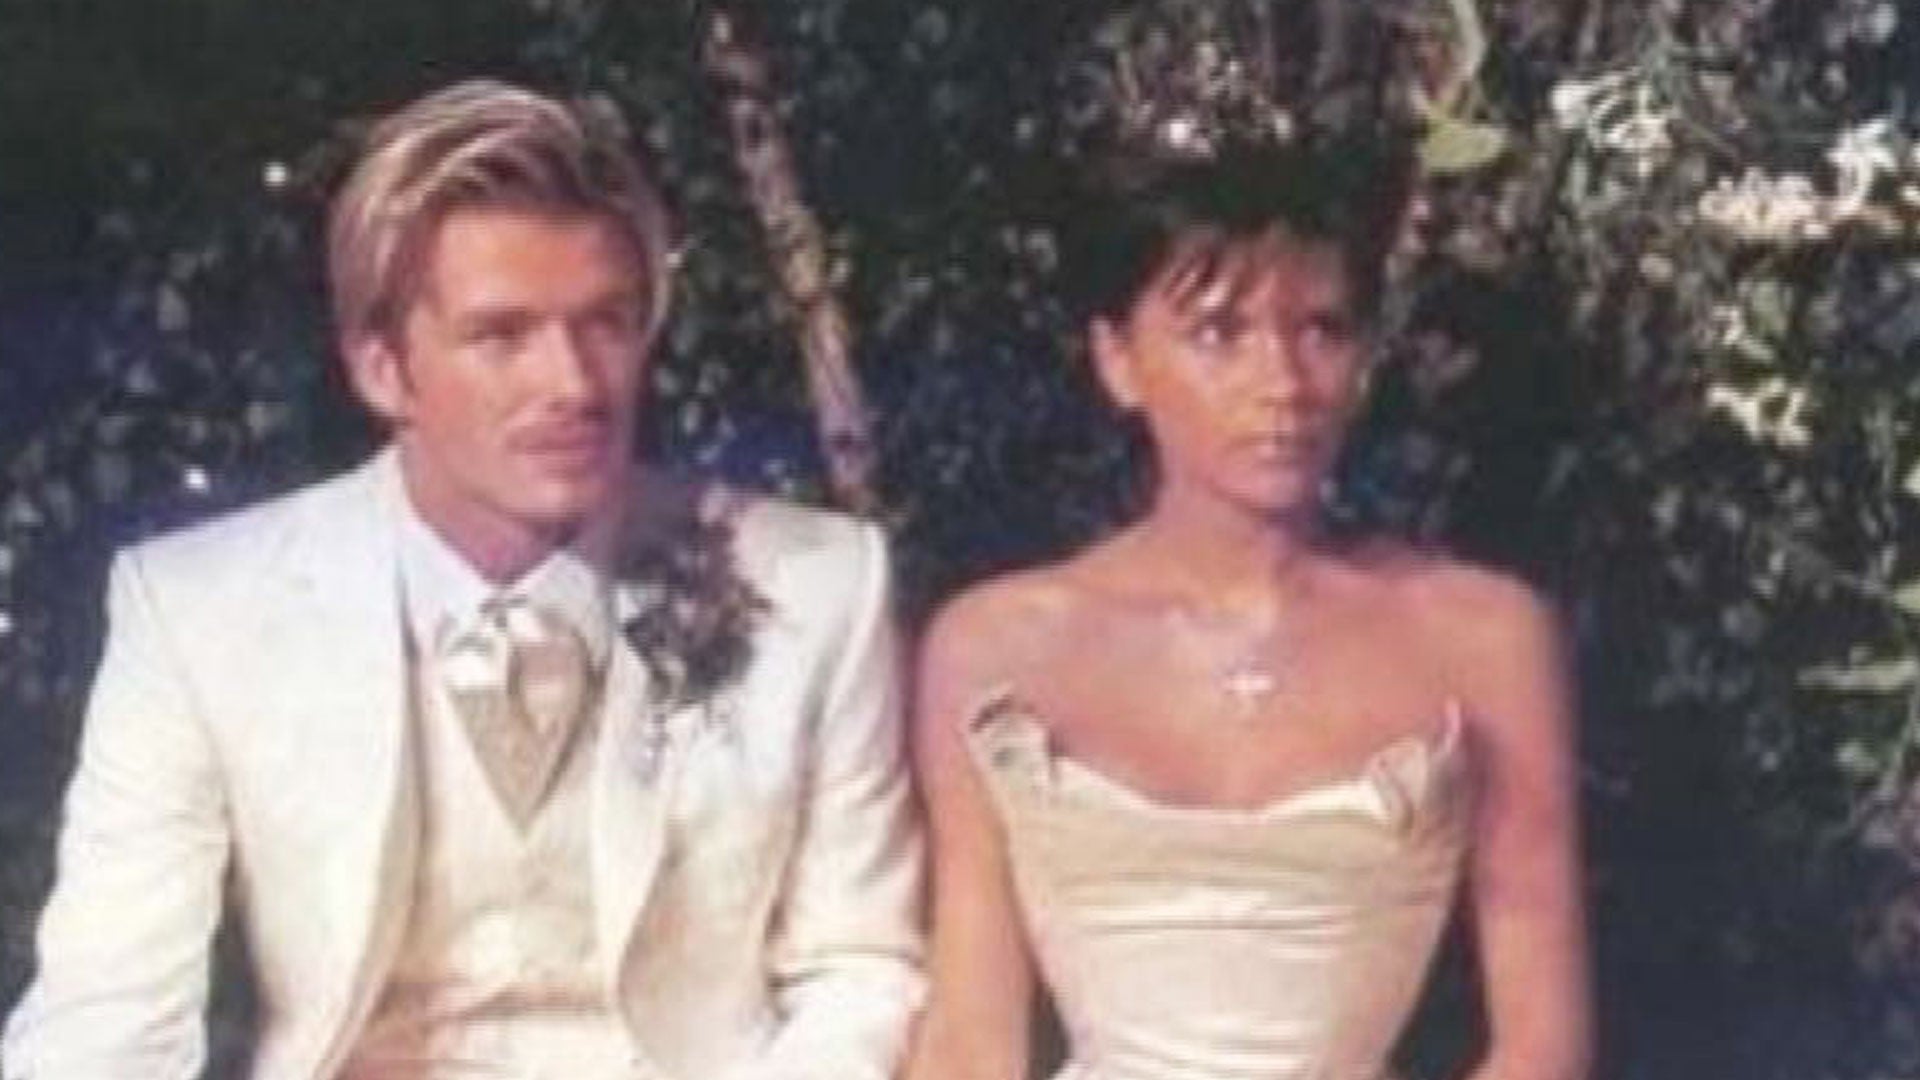 David and Victoria Beckham's oh-so-90s wedding: the lavish